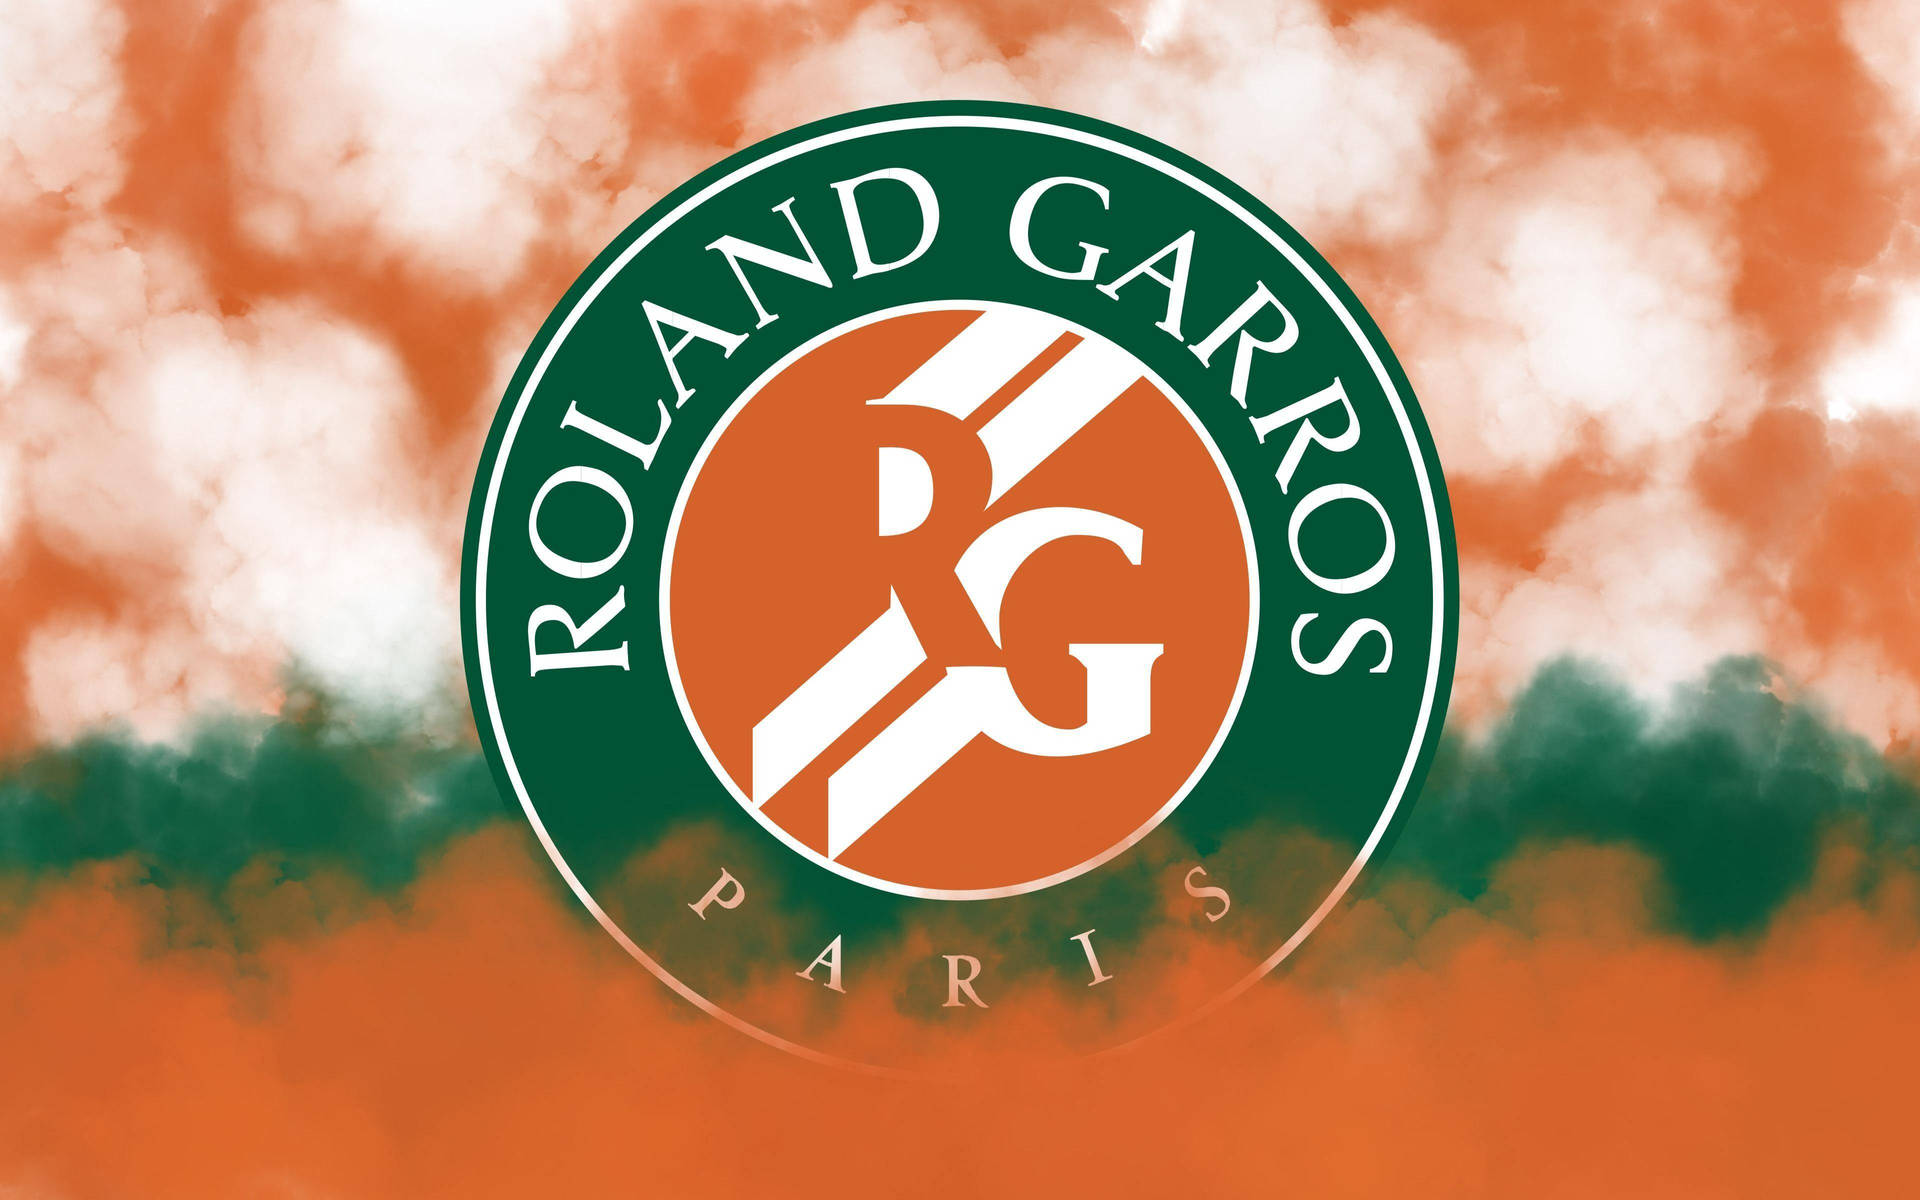 French Open Roland Garros Digital Logo Wallpaper